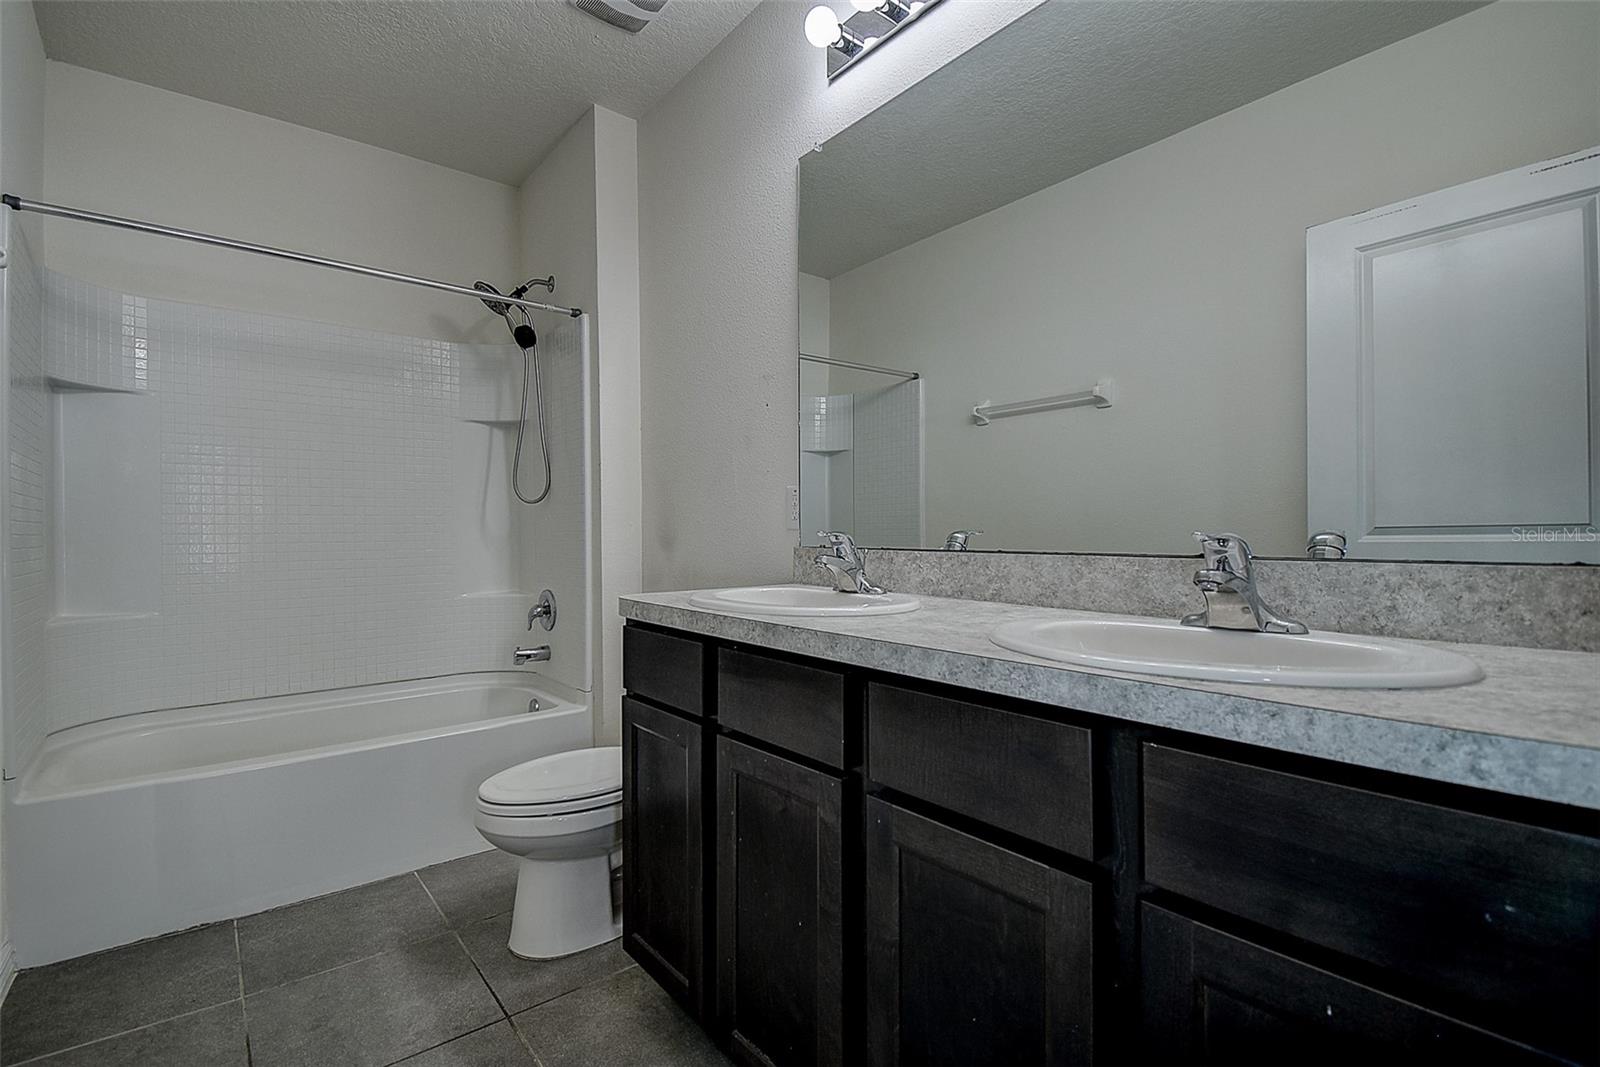 Bathroom 3. Dual sinks, tub/shower combo.